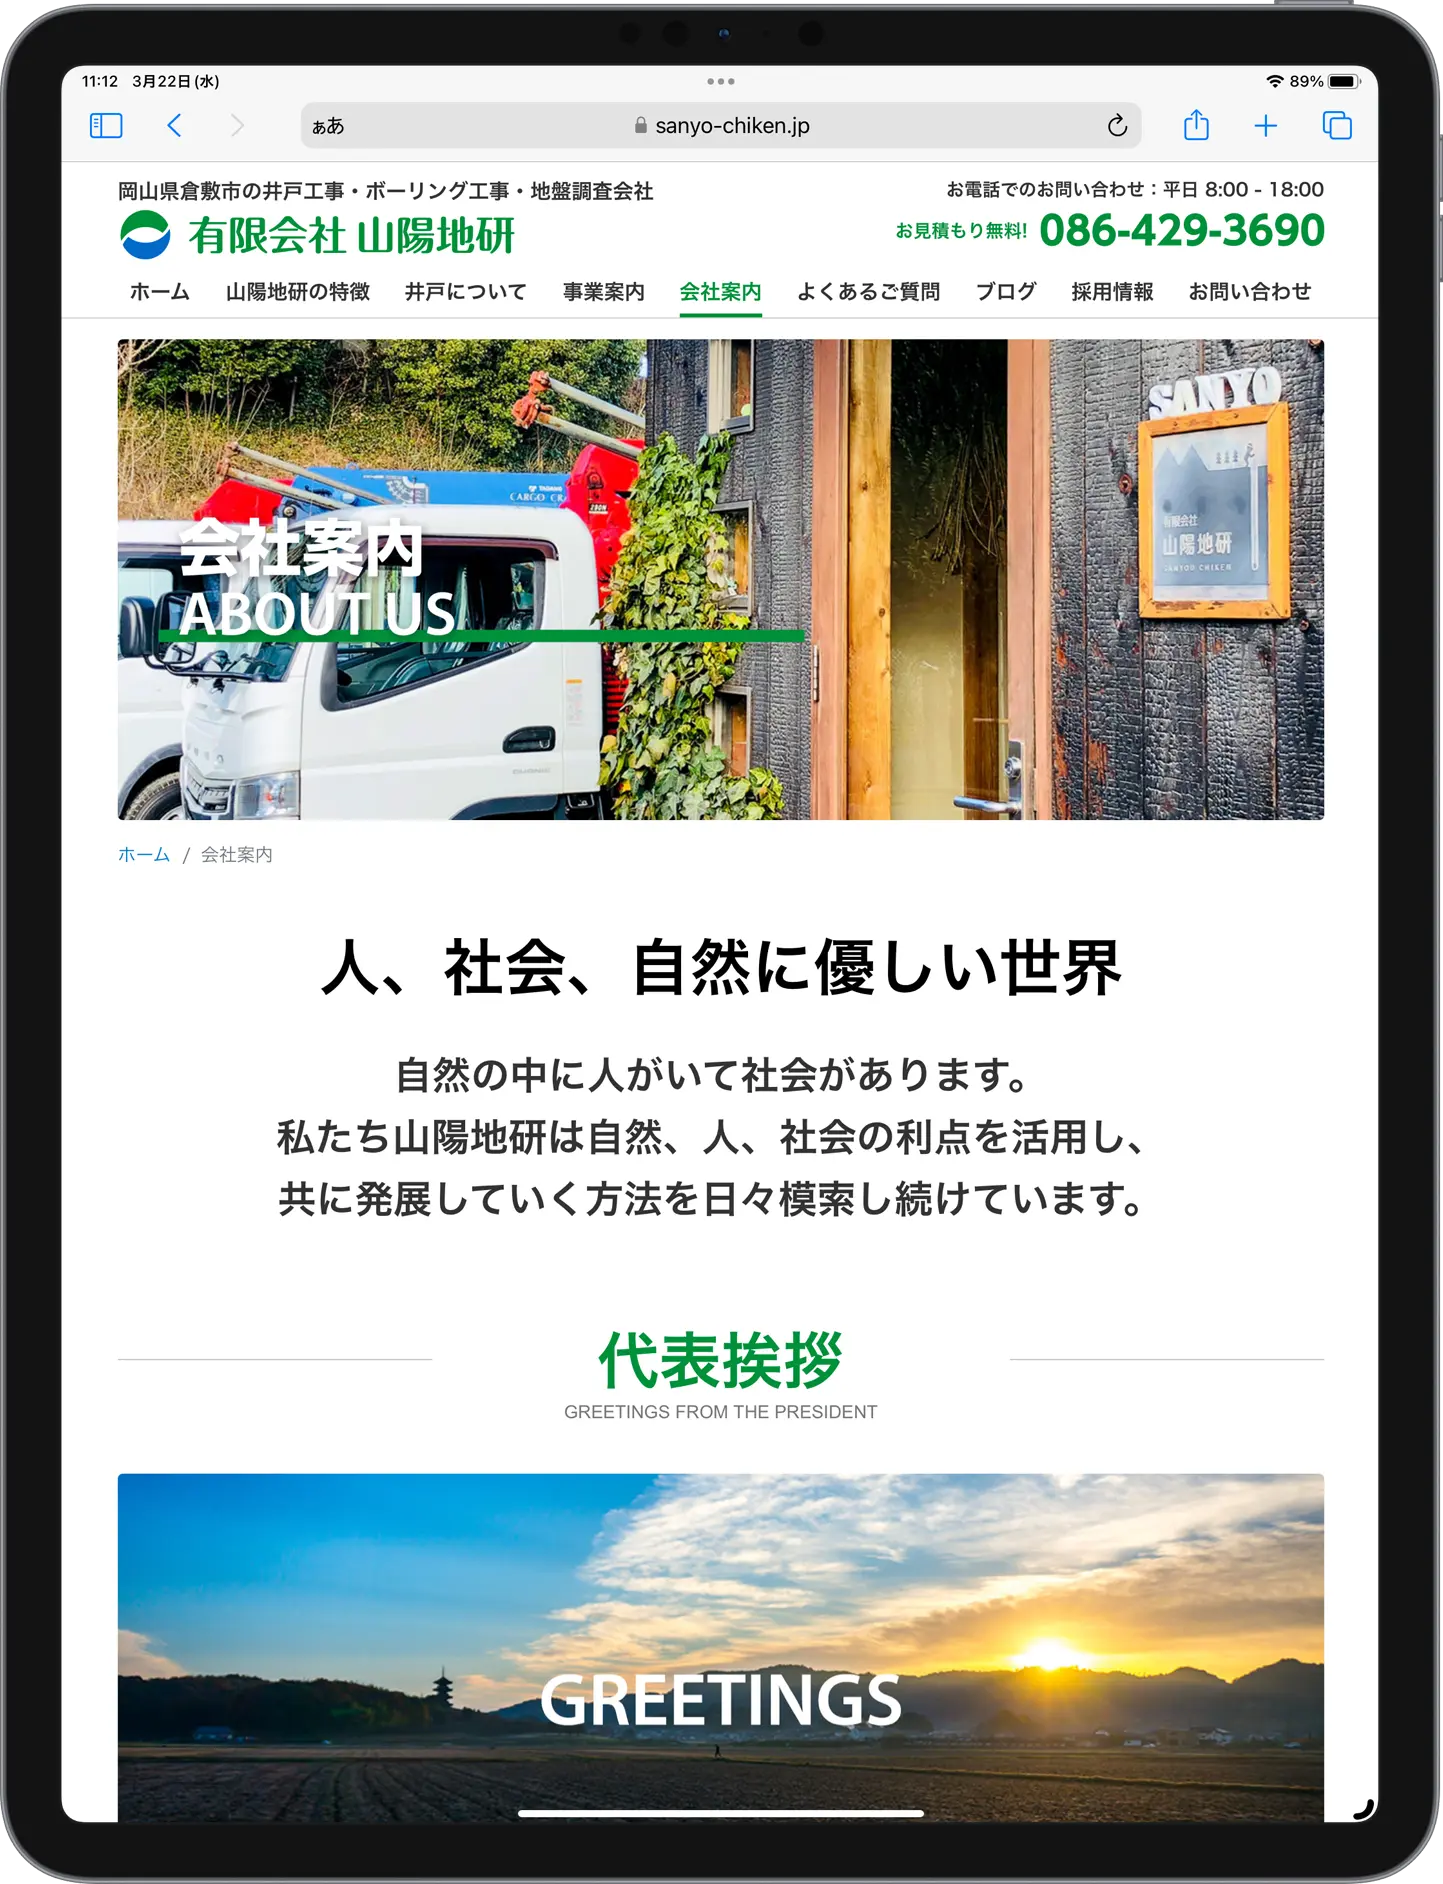 Sanyo Chiken - A Well Construction Company in Kurashiki, Okayama - Website Tablet View 01